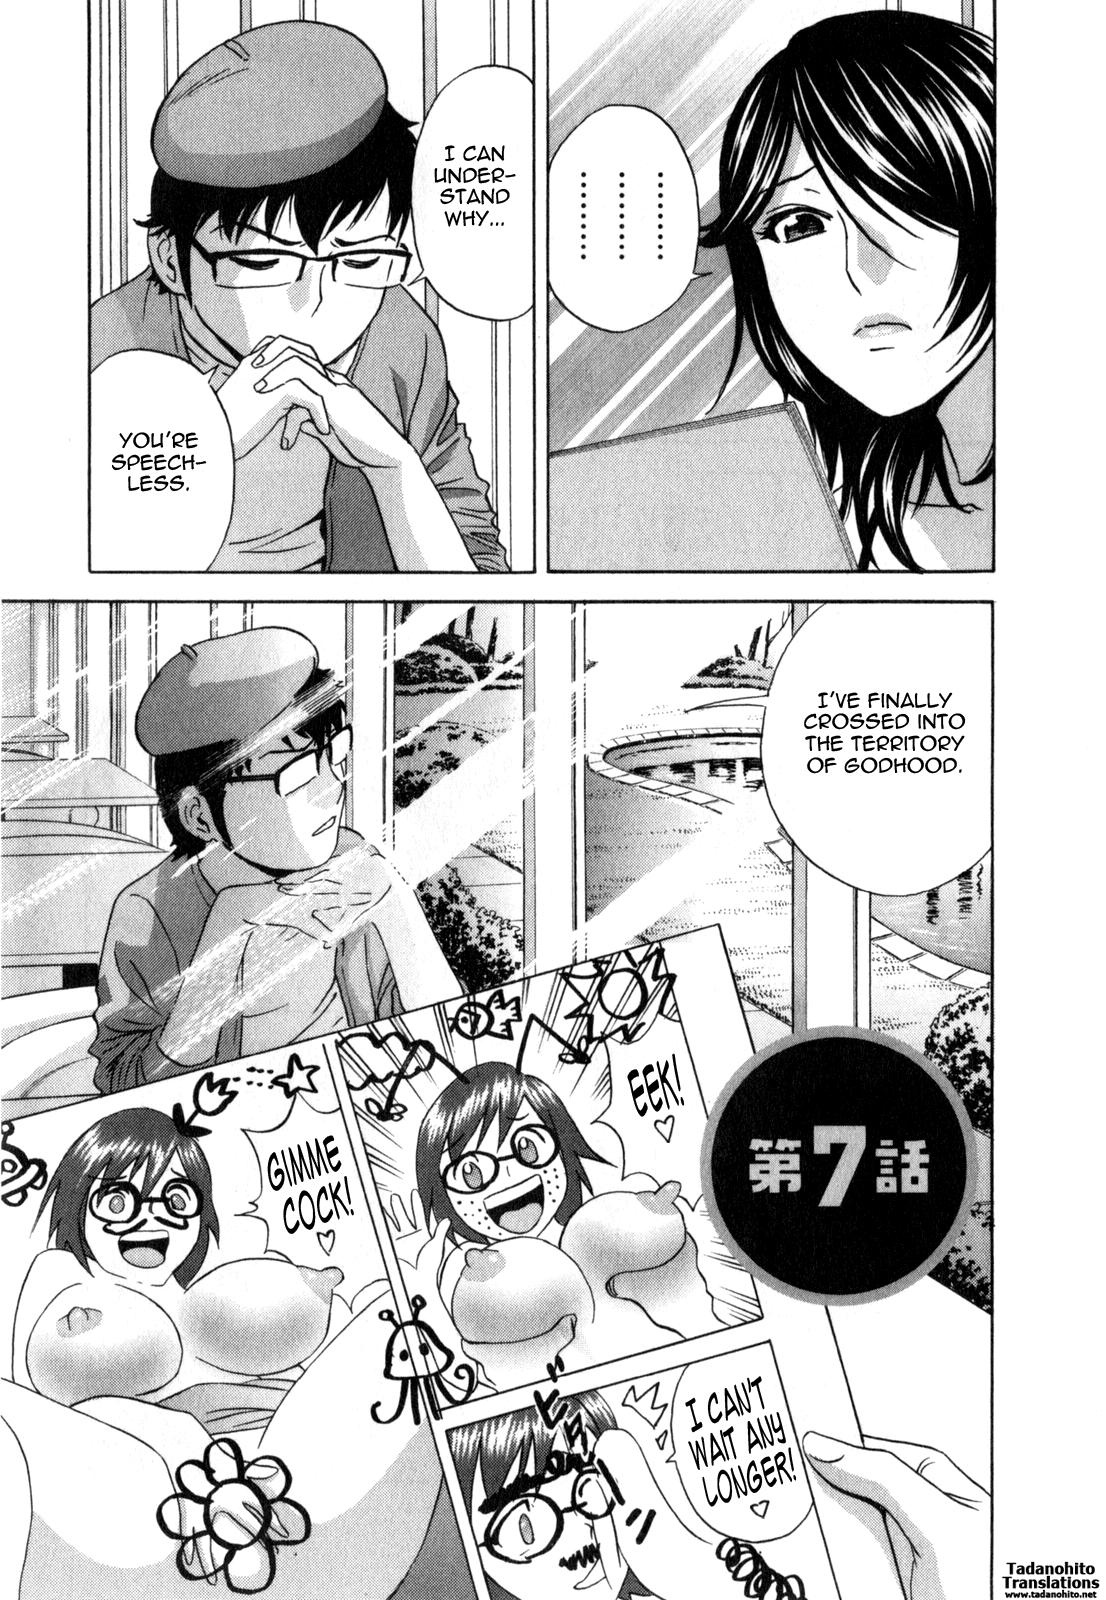 [Hidemaru] Life with Married Women Just Like a Manga 3 - Ch. 1-8 [English] {Tadanohito} 126